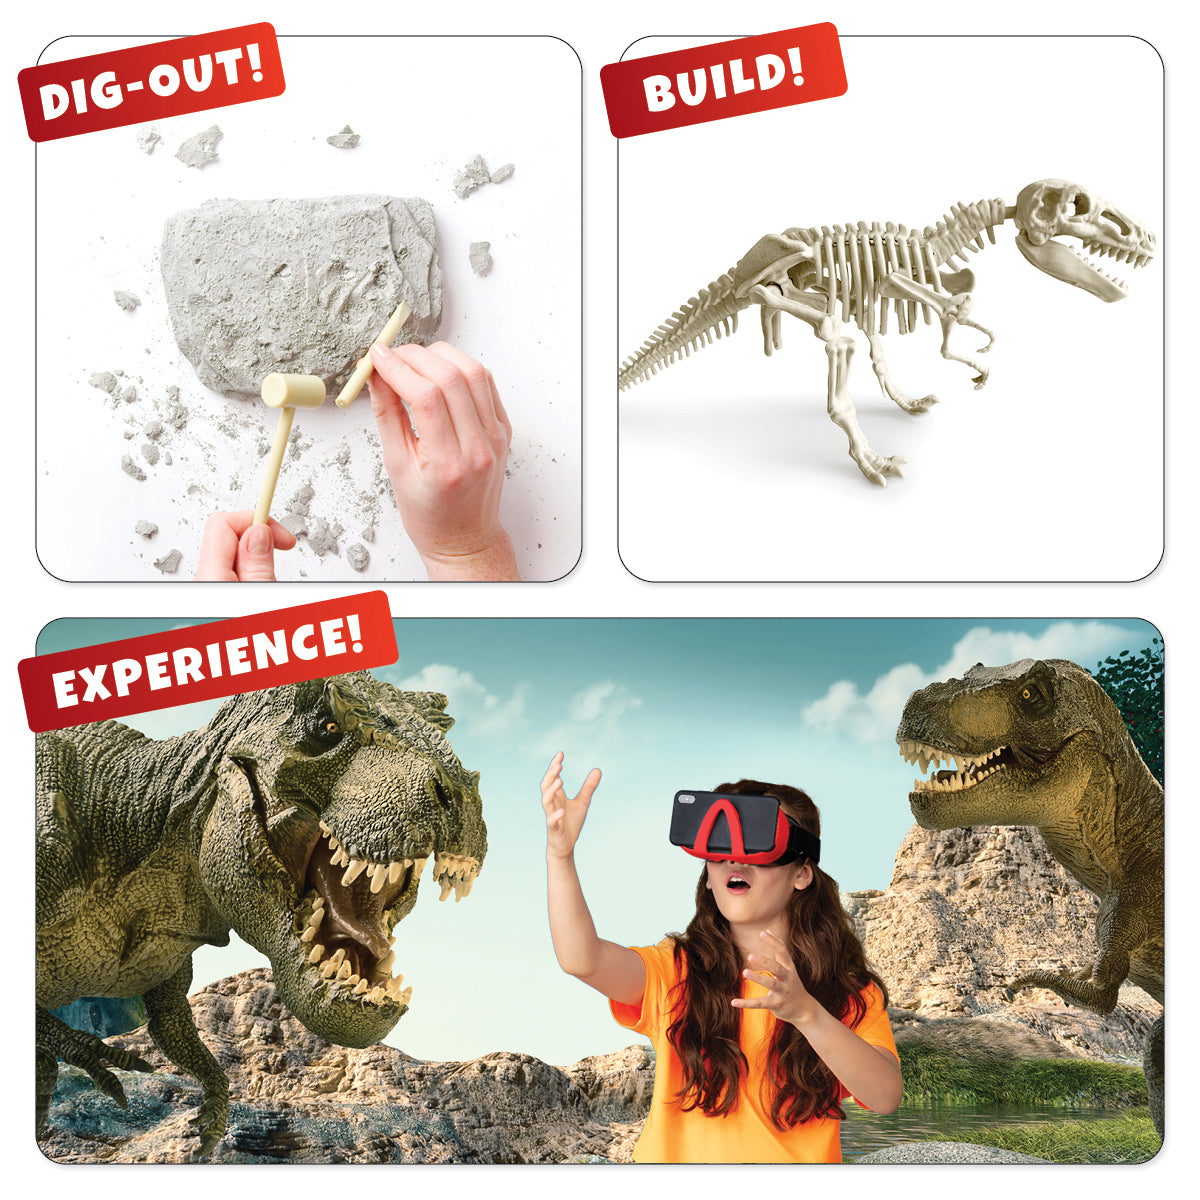 Virtual Reality Dinosaur Exploration Kit - DINO DIG VR